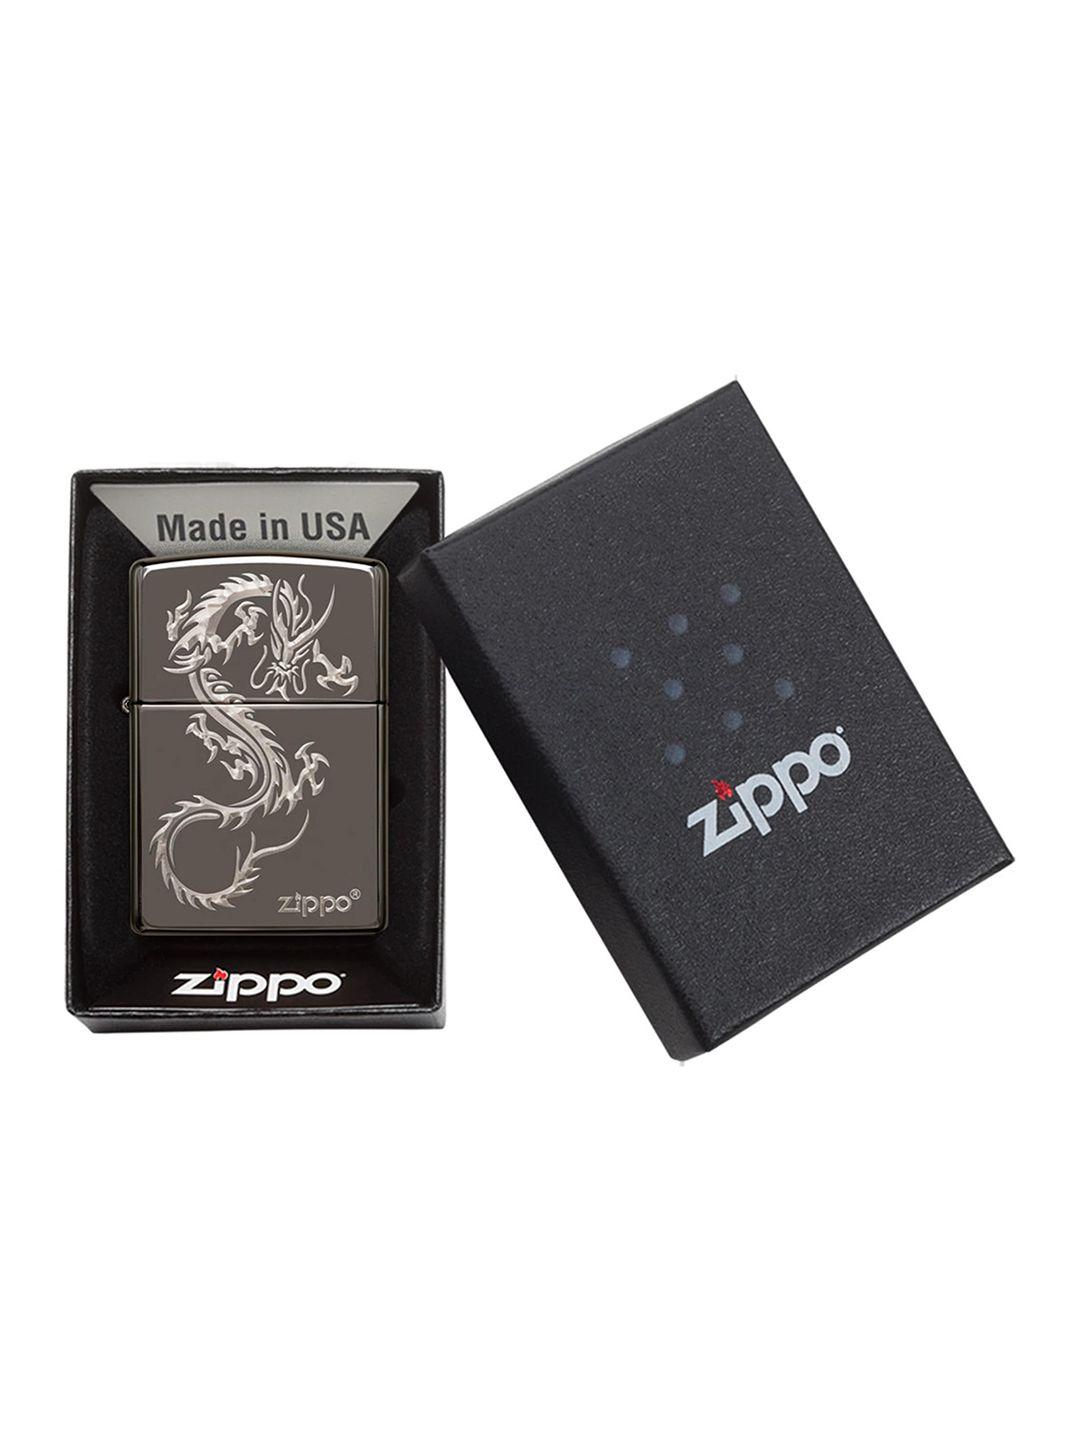 zippo charcoal grey & white pocket lighter